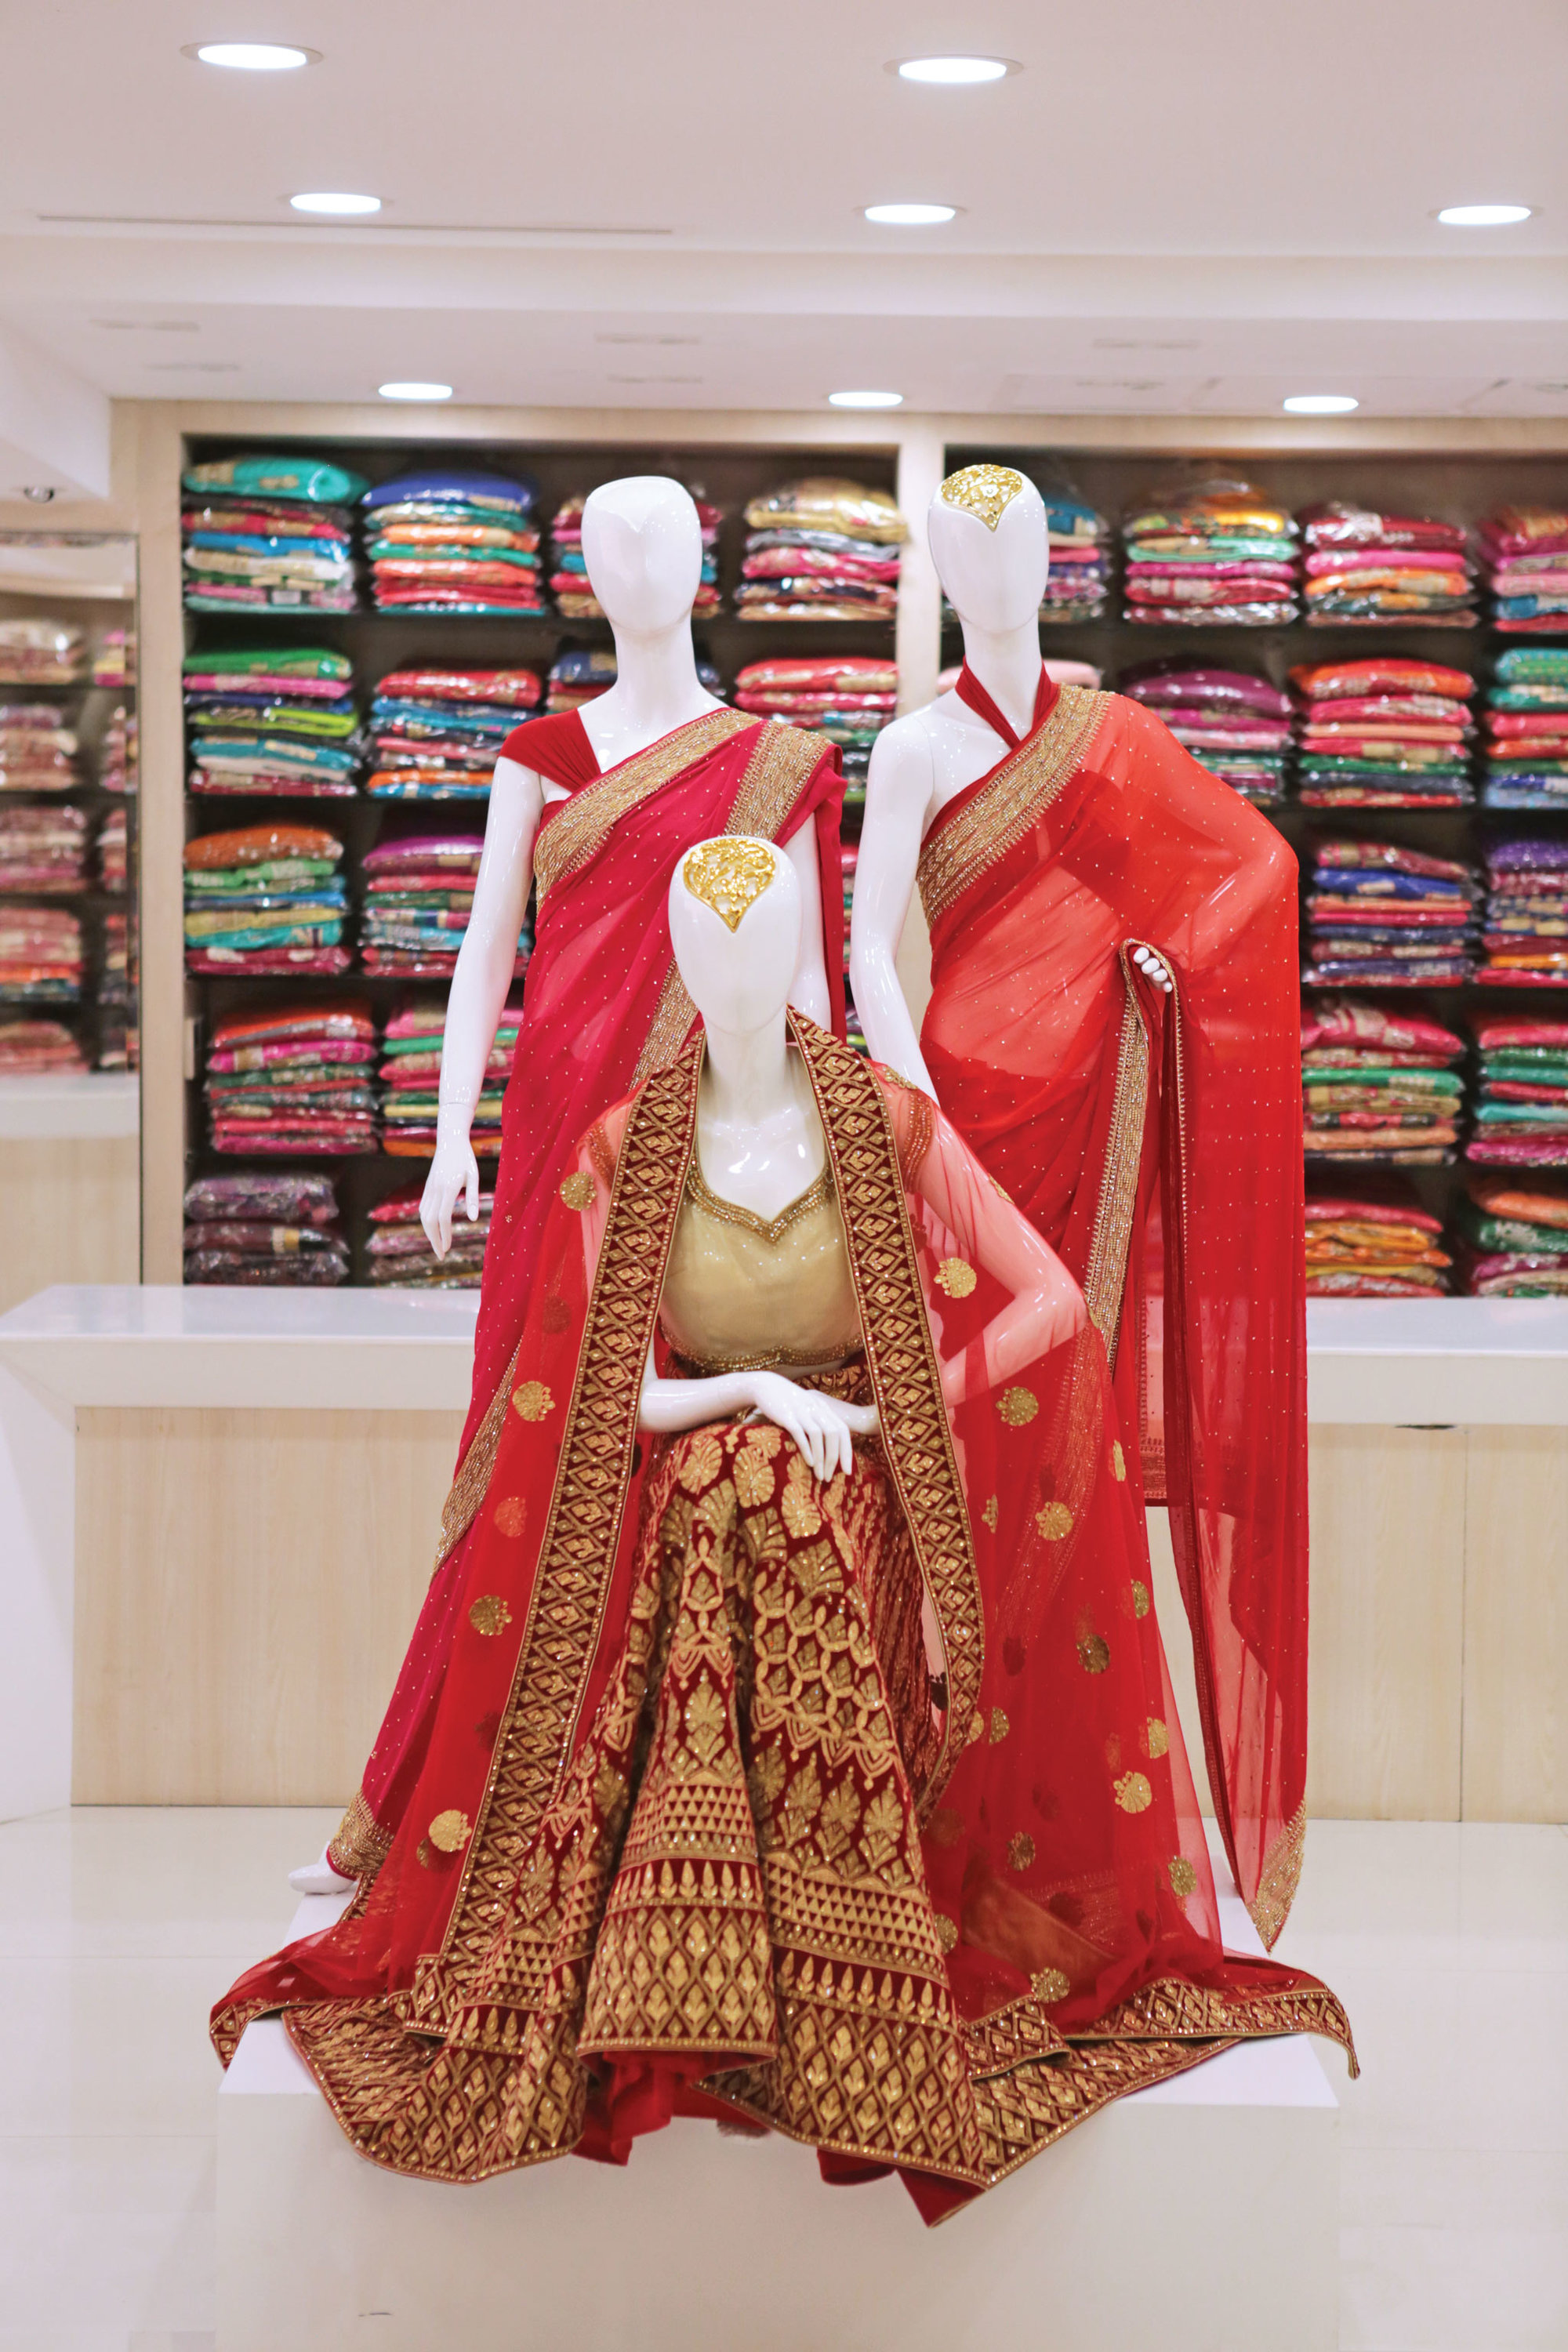  Fabric  Gallery  Shopping in Sri  Lanka 